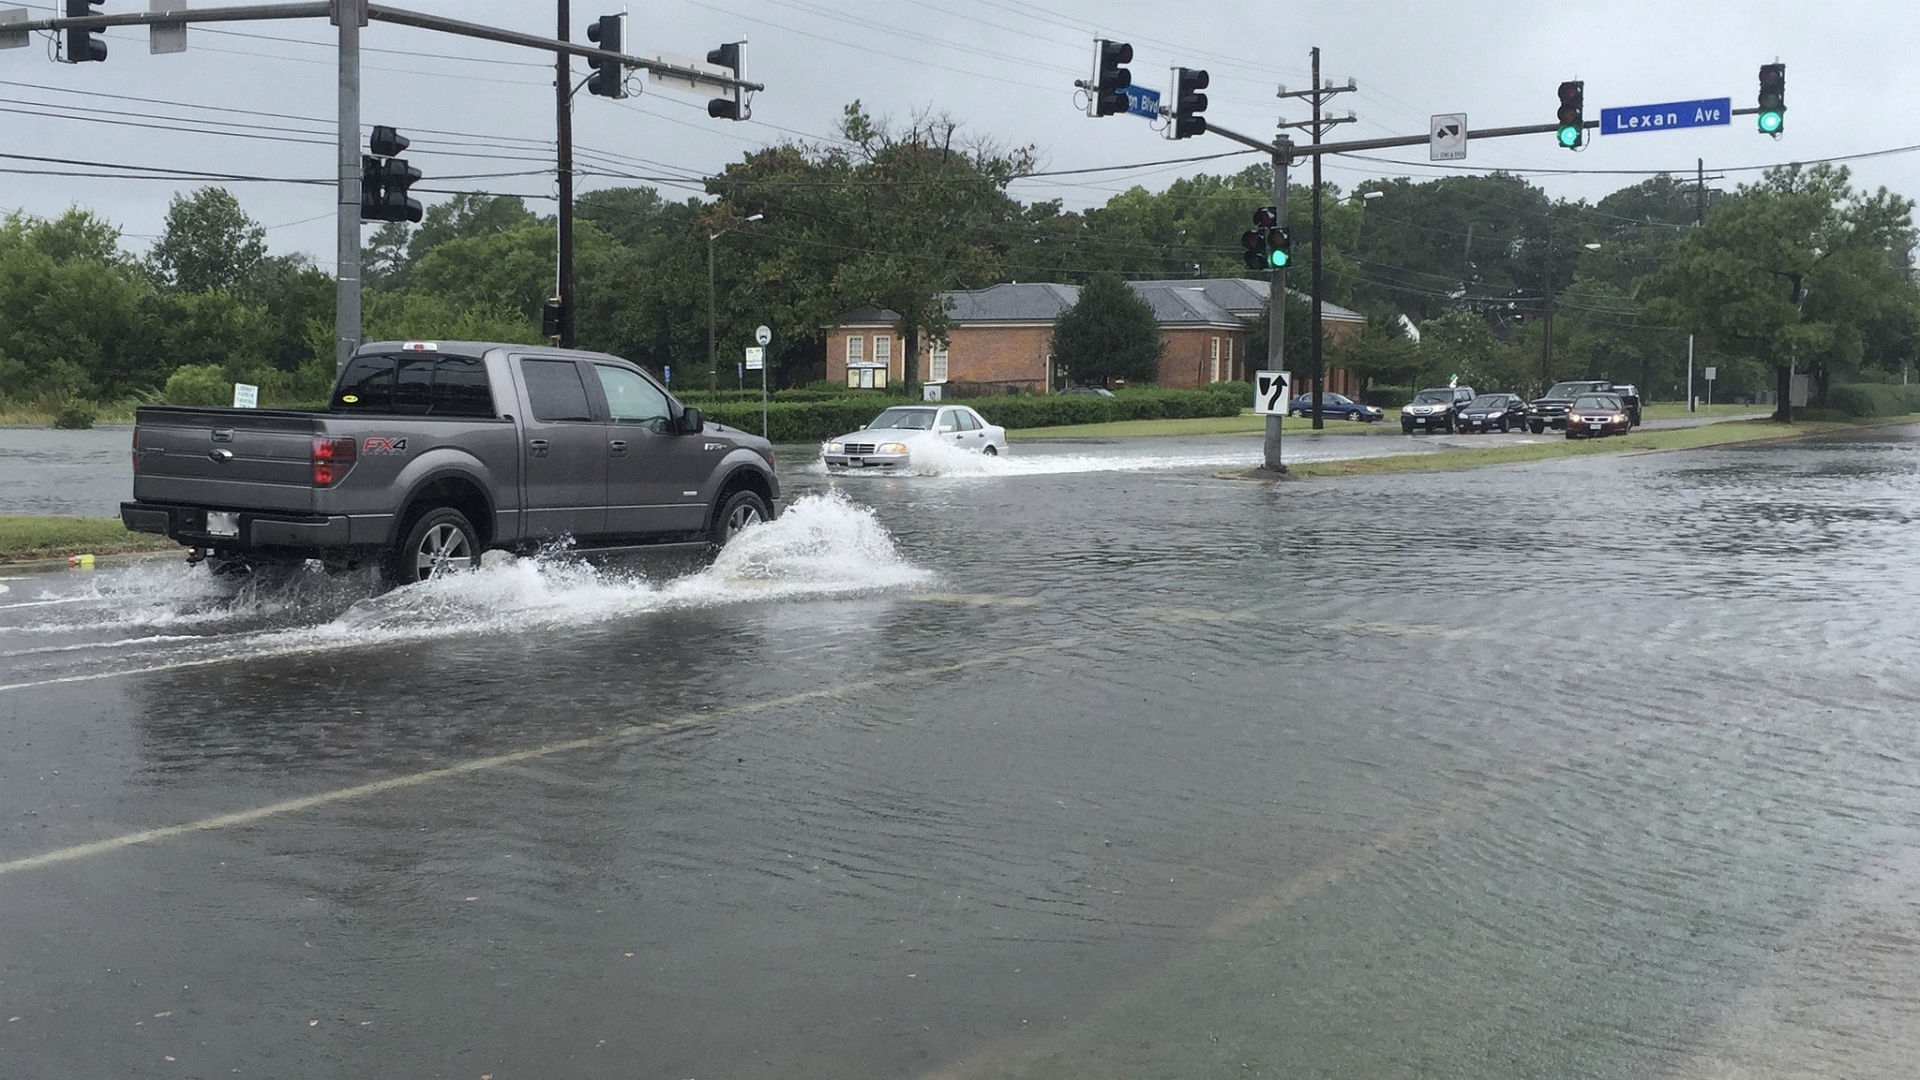 nuisance street flooding in Norfolk, VA